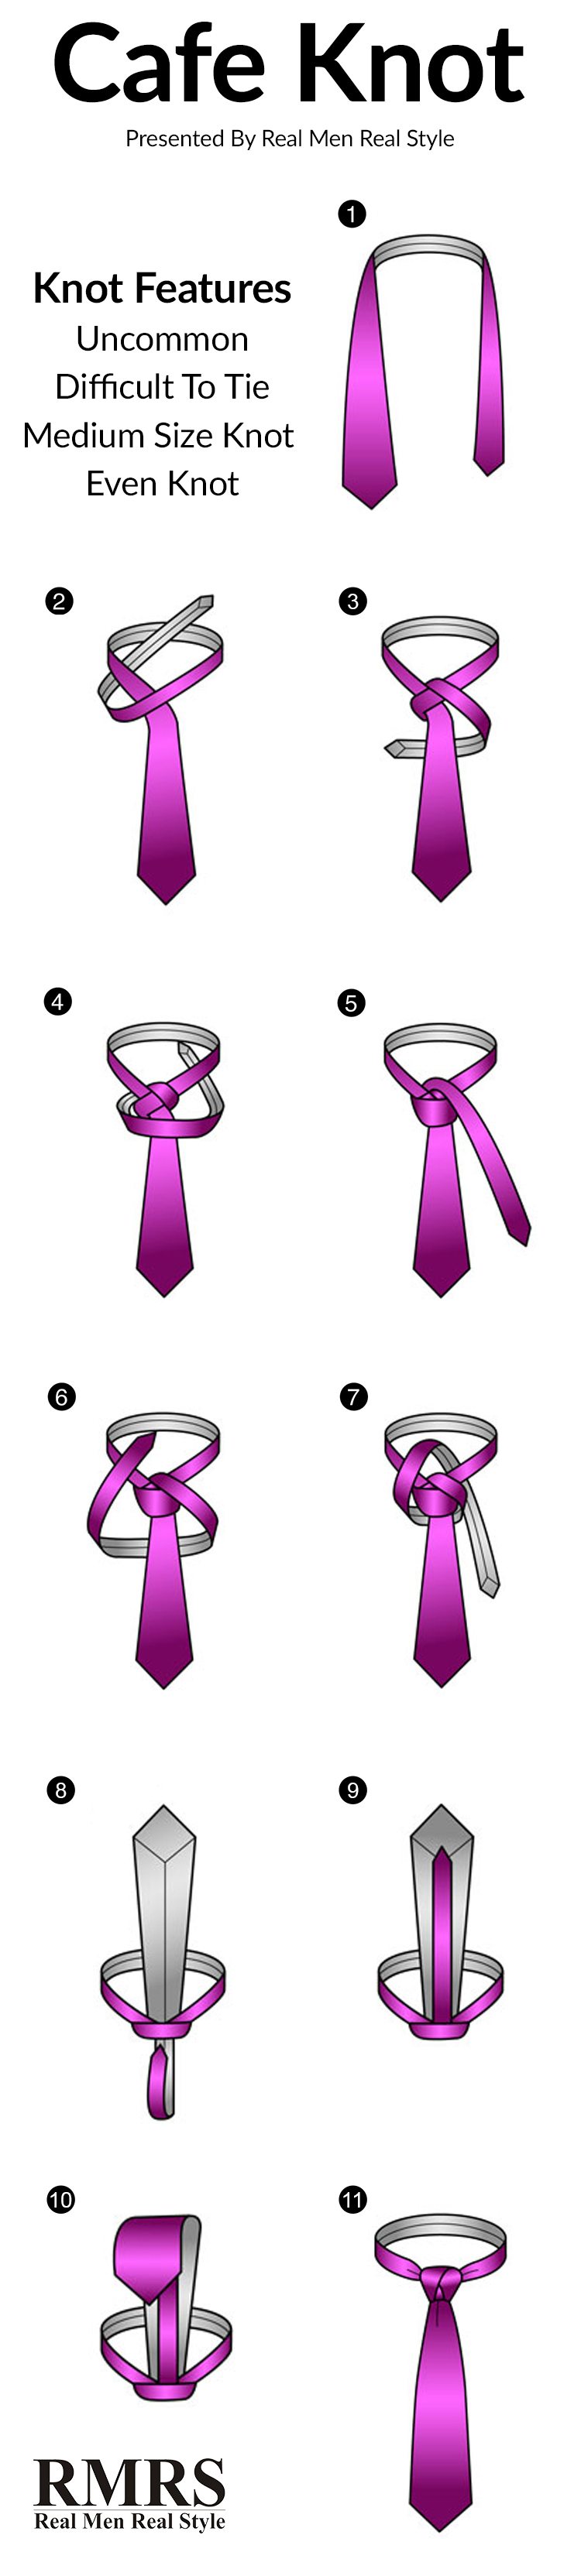 complex-tie-knots-cafe-knot-infographic-image